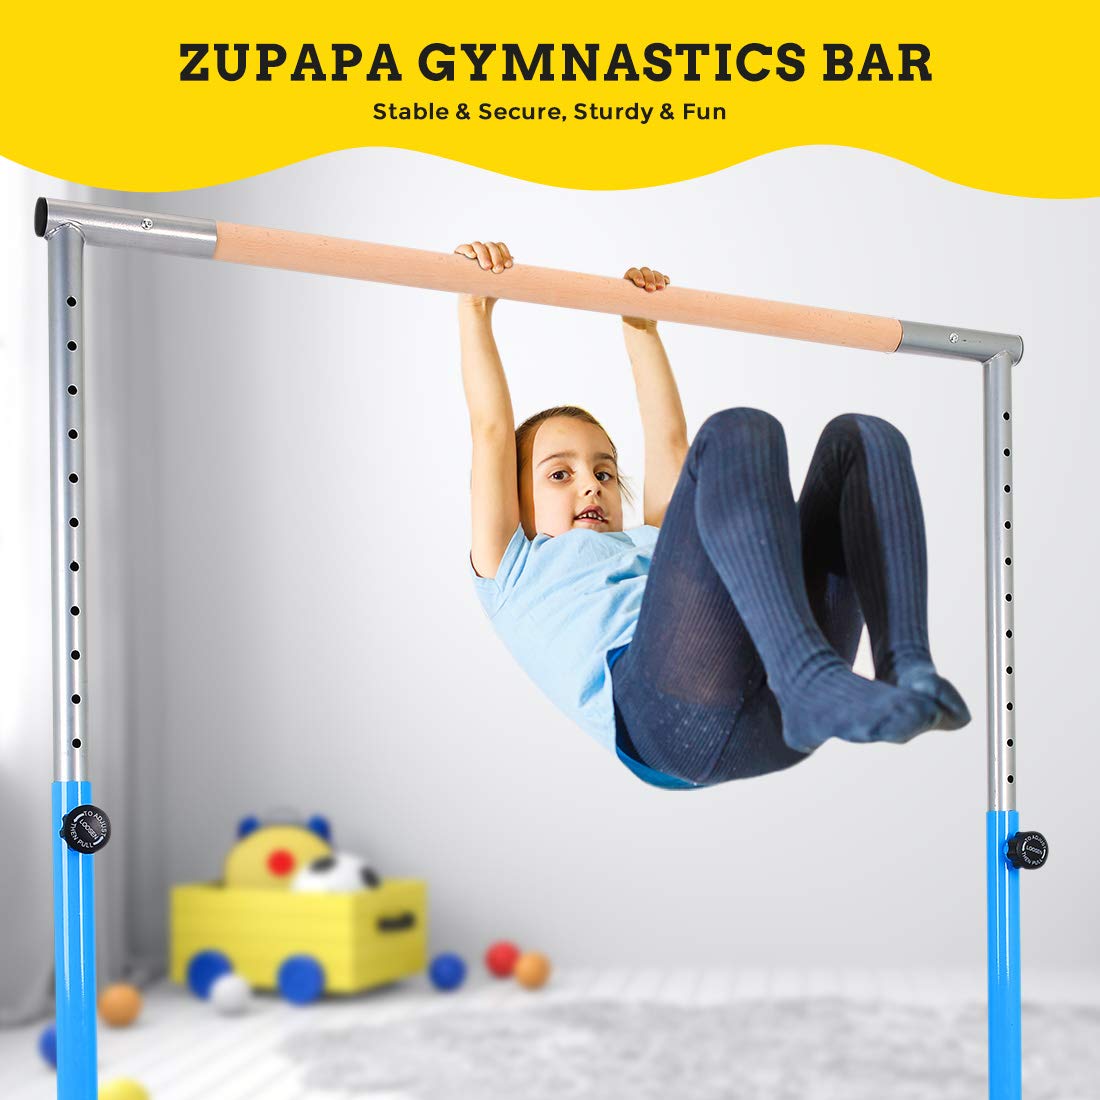 Best Gymnastics Bar for Home